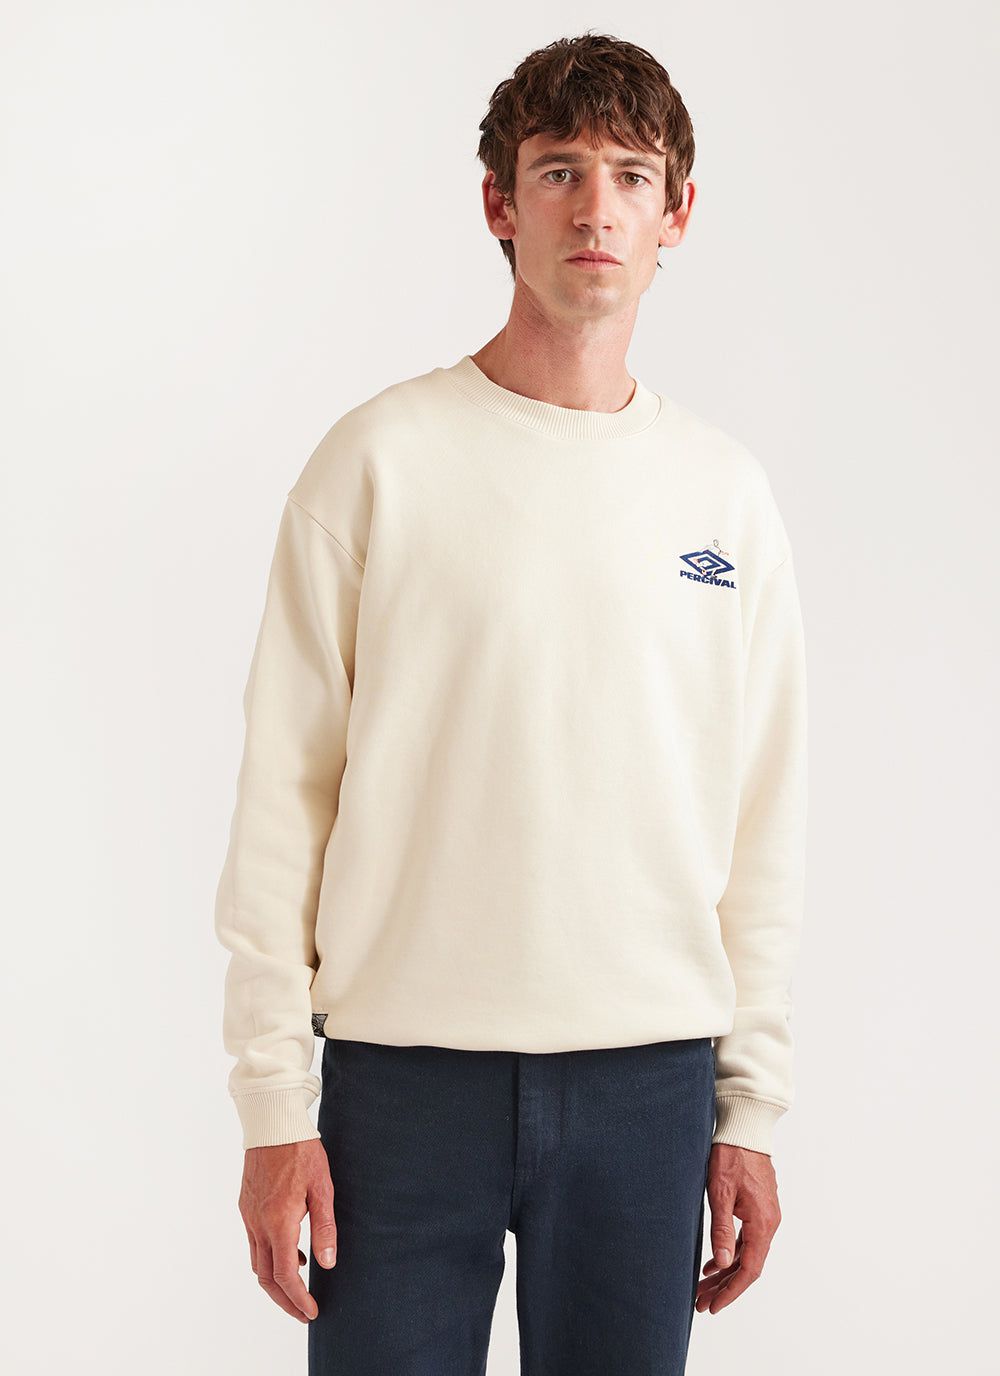 Men's Umbro Sweatshirt | Umbro x Percival | Ecru | Percival Menswear